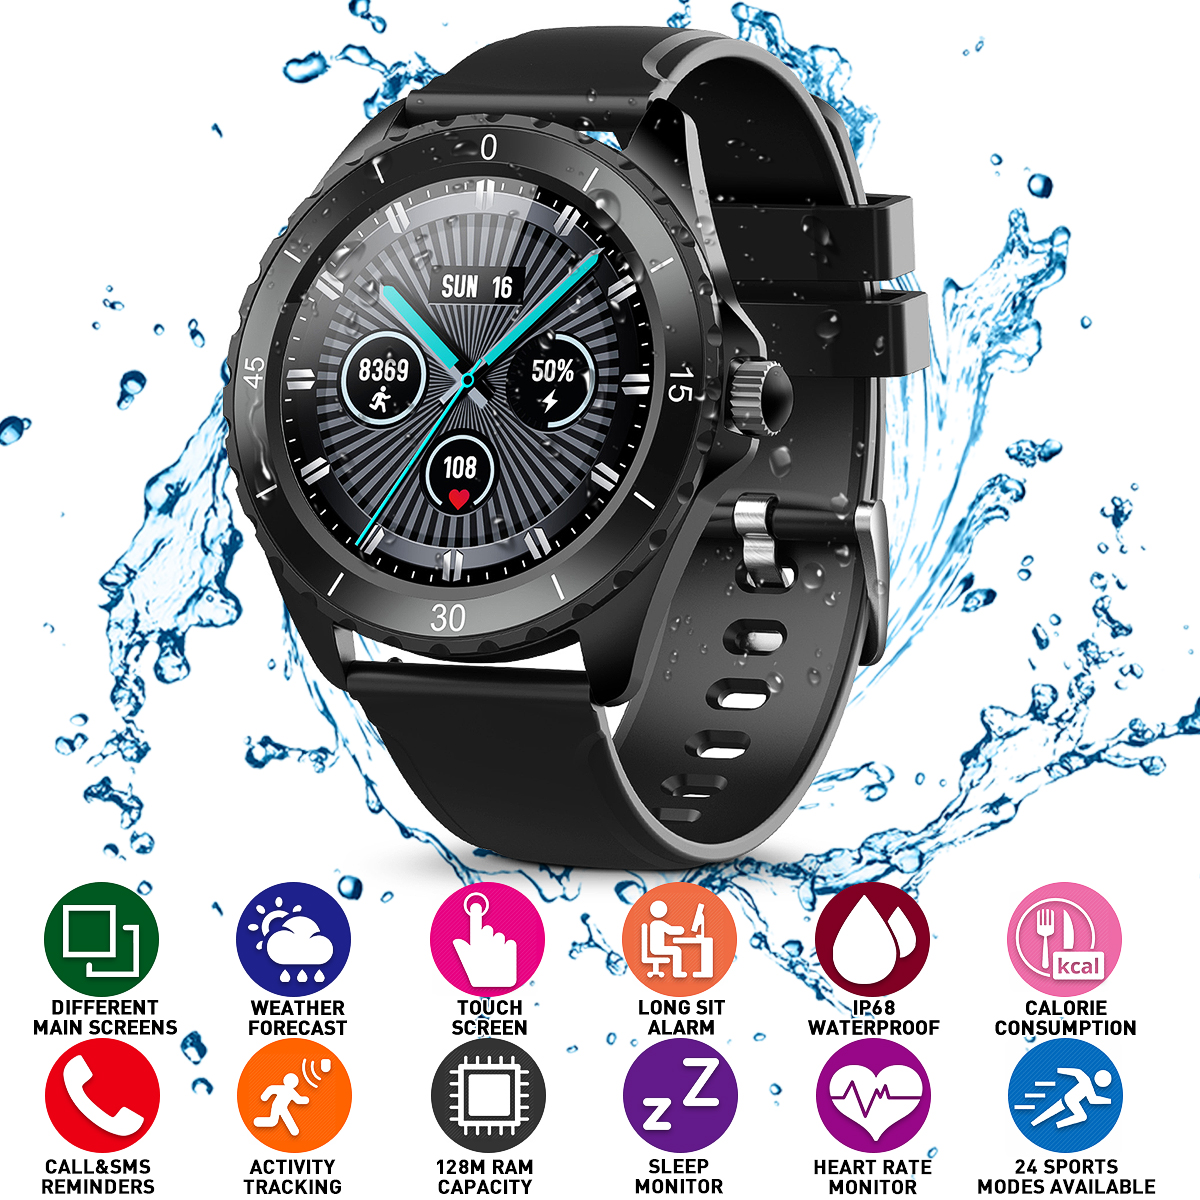 ELEGIANT schwarz C520 TPU, Smartwatch